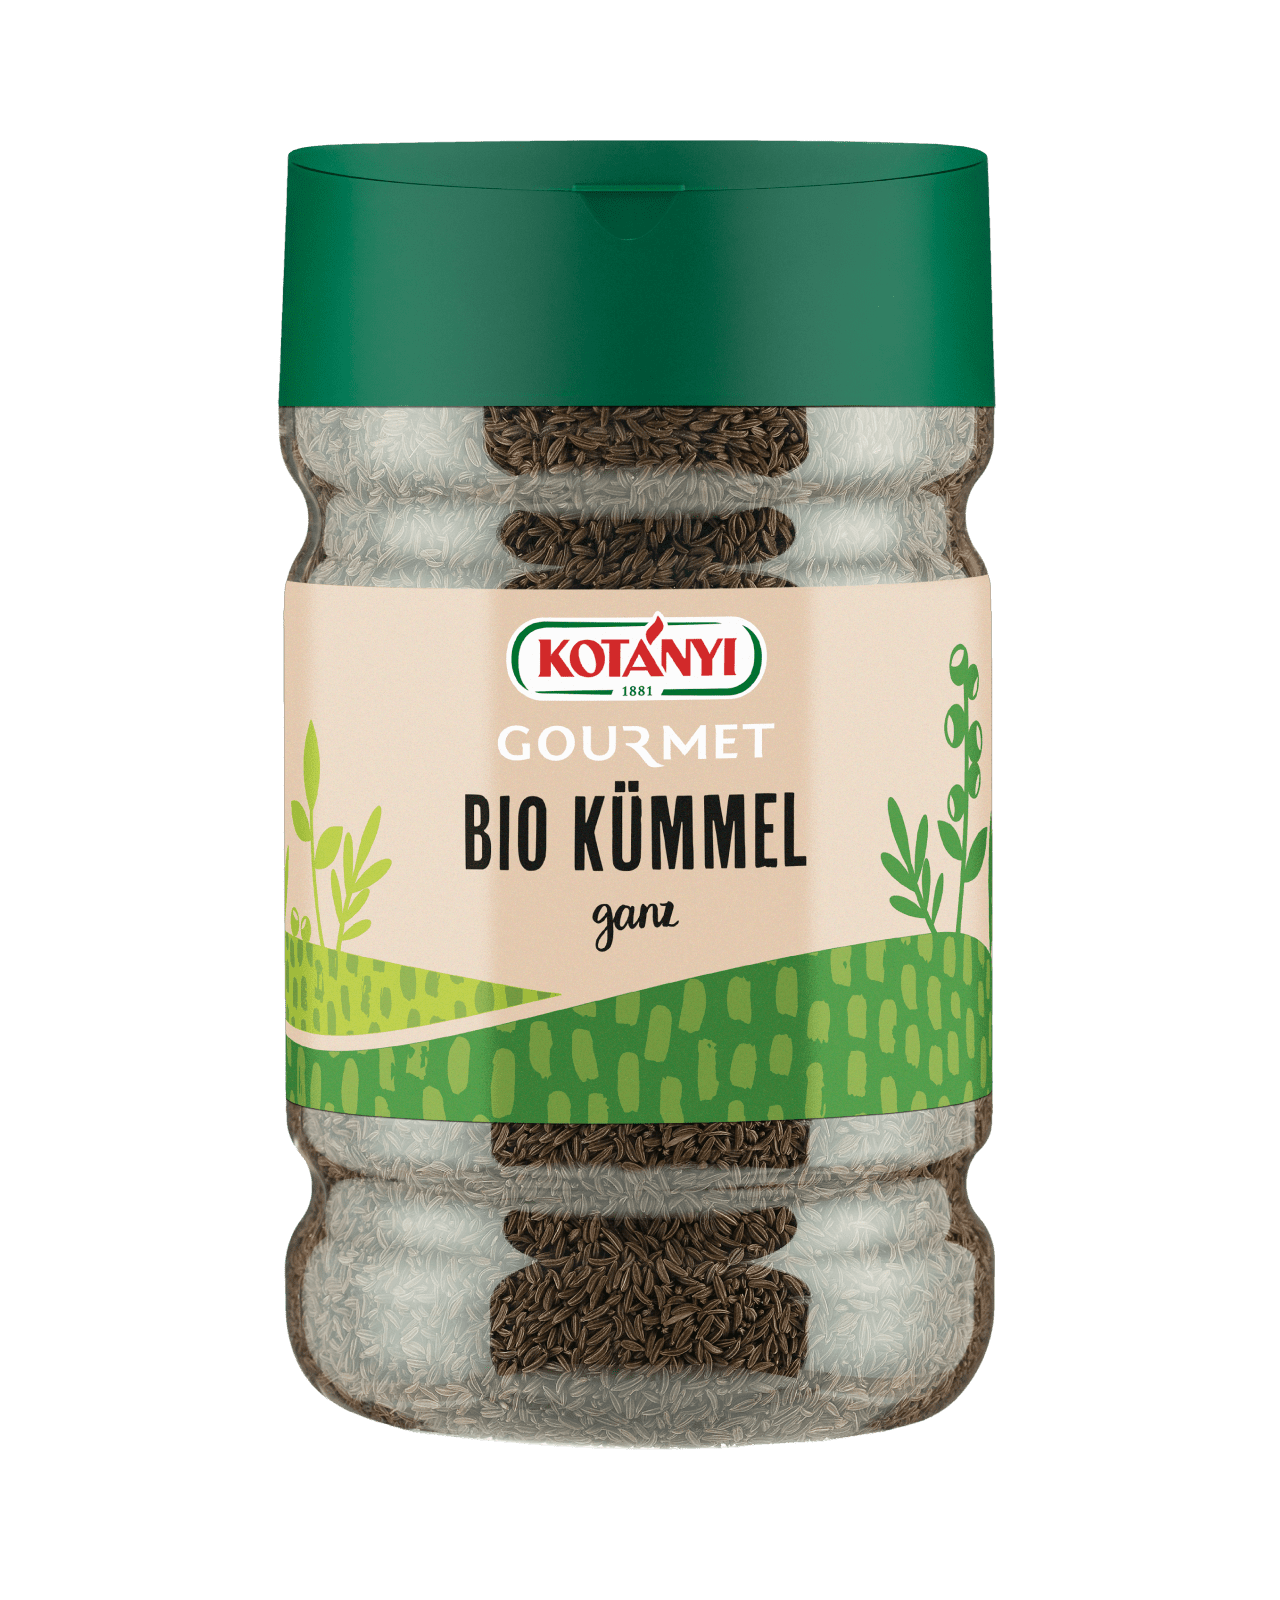 Kotányi Gourmet Bio Kümmel ganz in der 1200ccm Dose